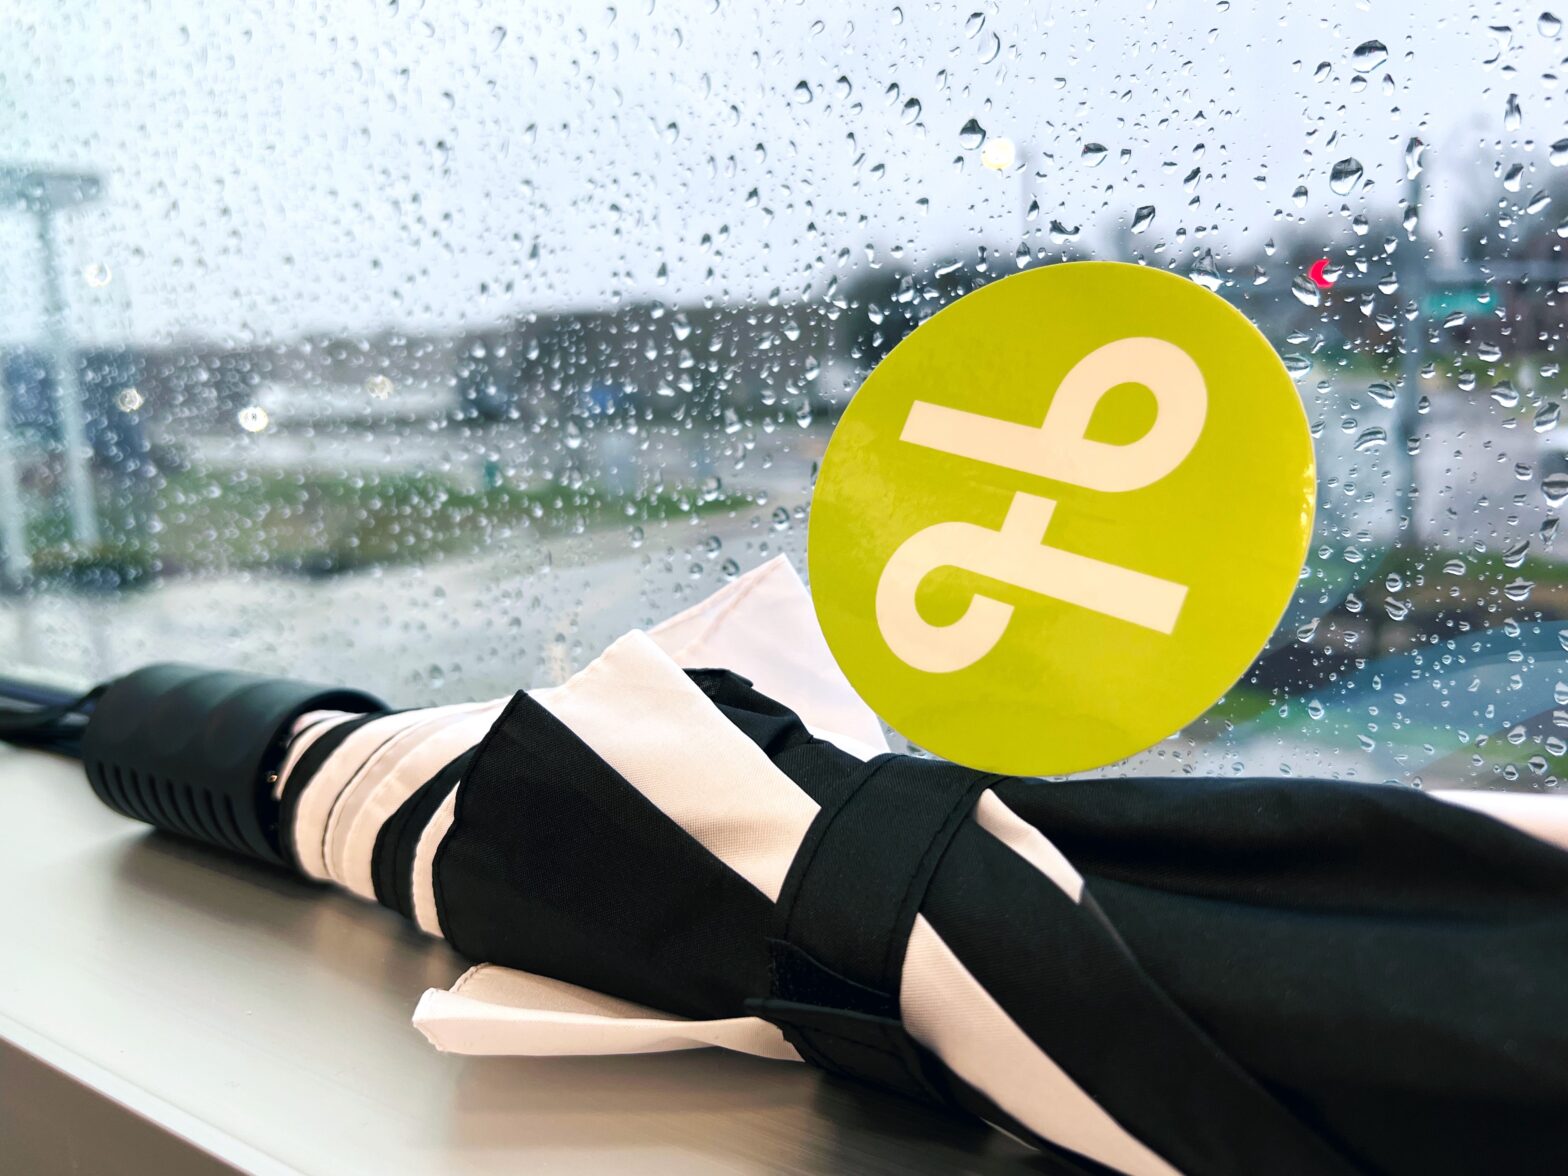 umbrella in rainy widow with Lextran logo